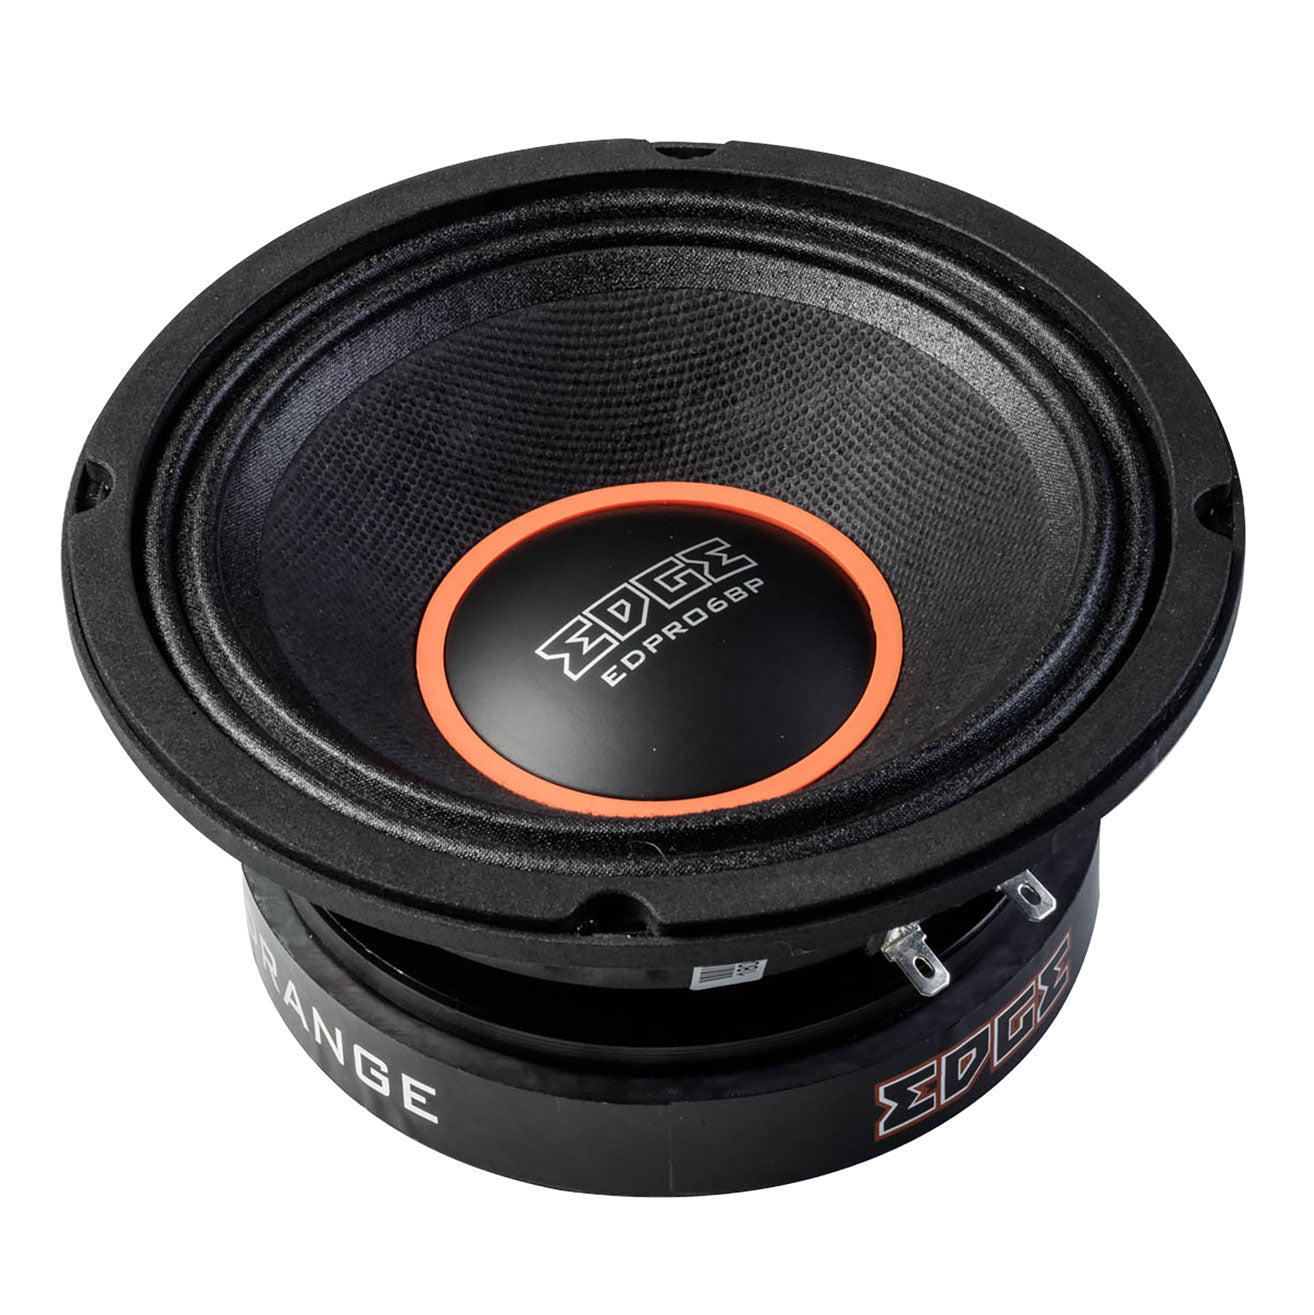 EDXPRO6BP-E8 | EDGE Xtreme Series 6.5 inch 350 watts 90dB Pro Audio Midrange Speaker - Single